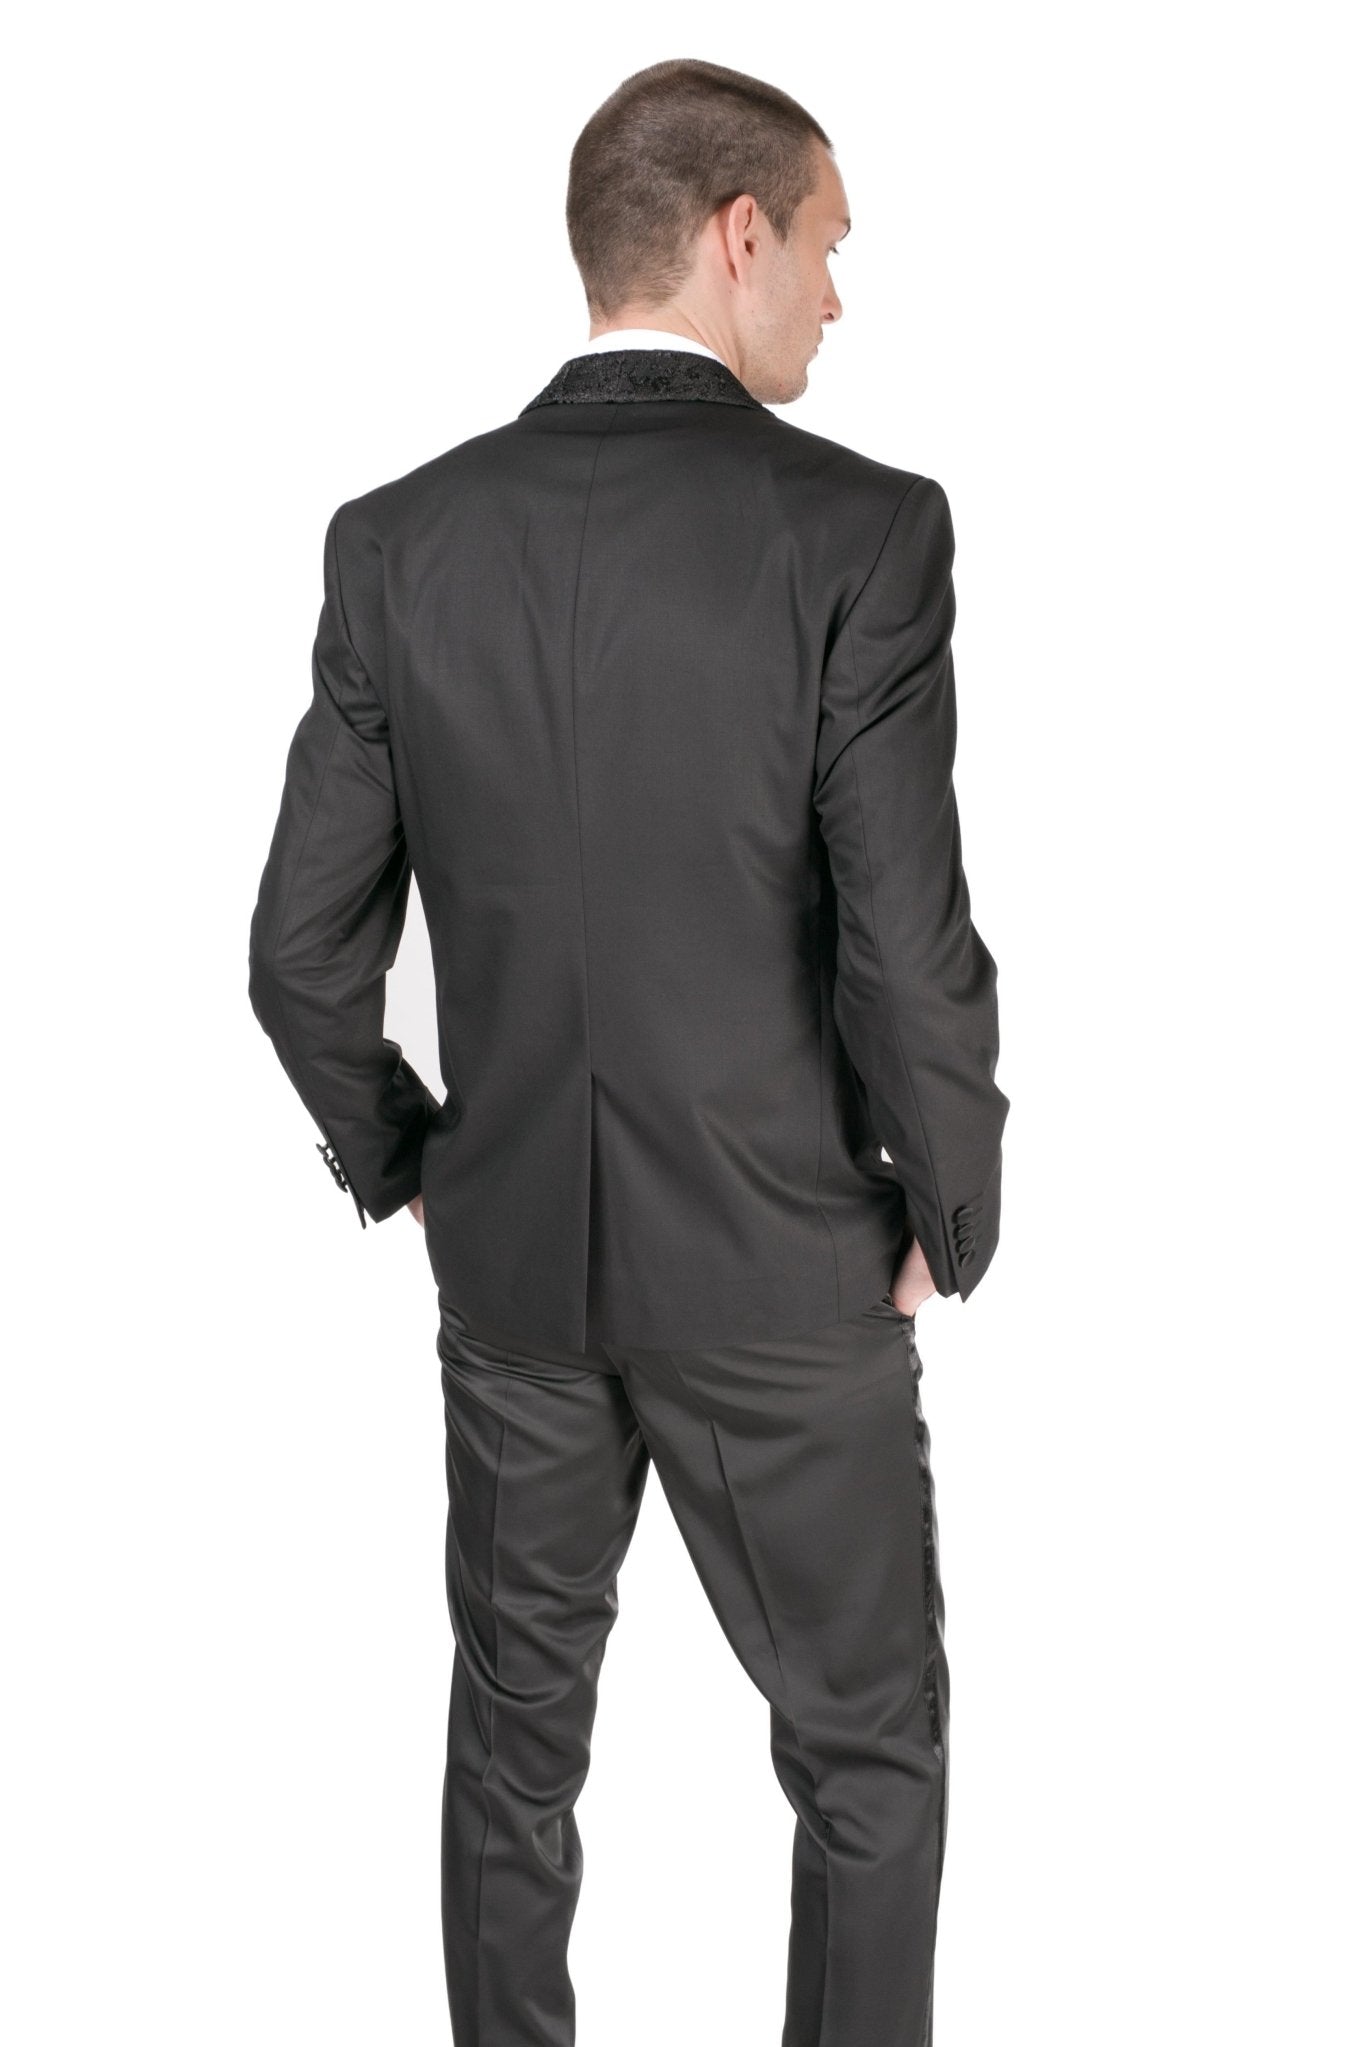 Ludlow Shawl Collar Tuxedo Jacket - Black Lace - Ron Tomson